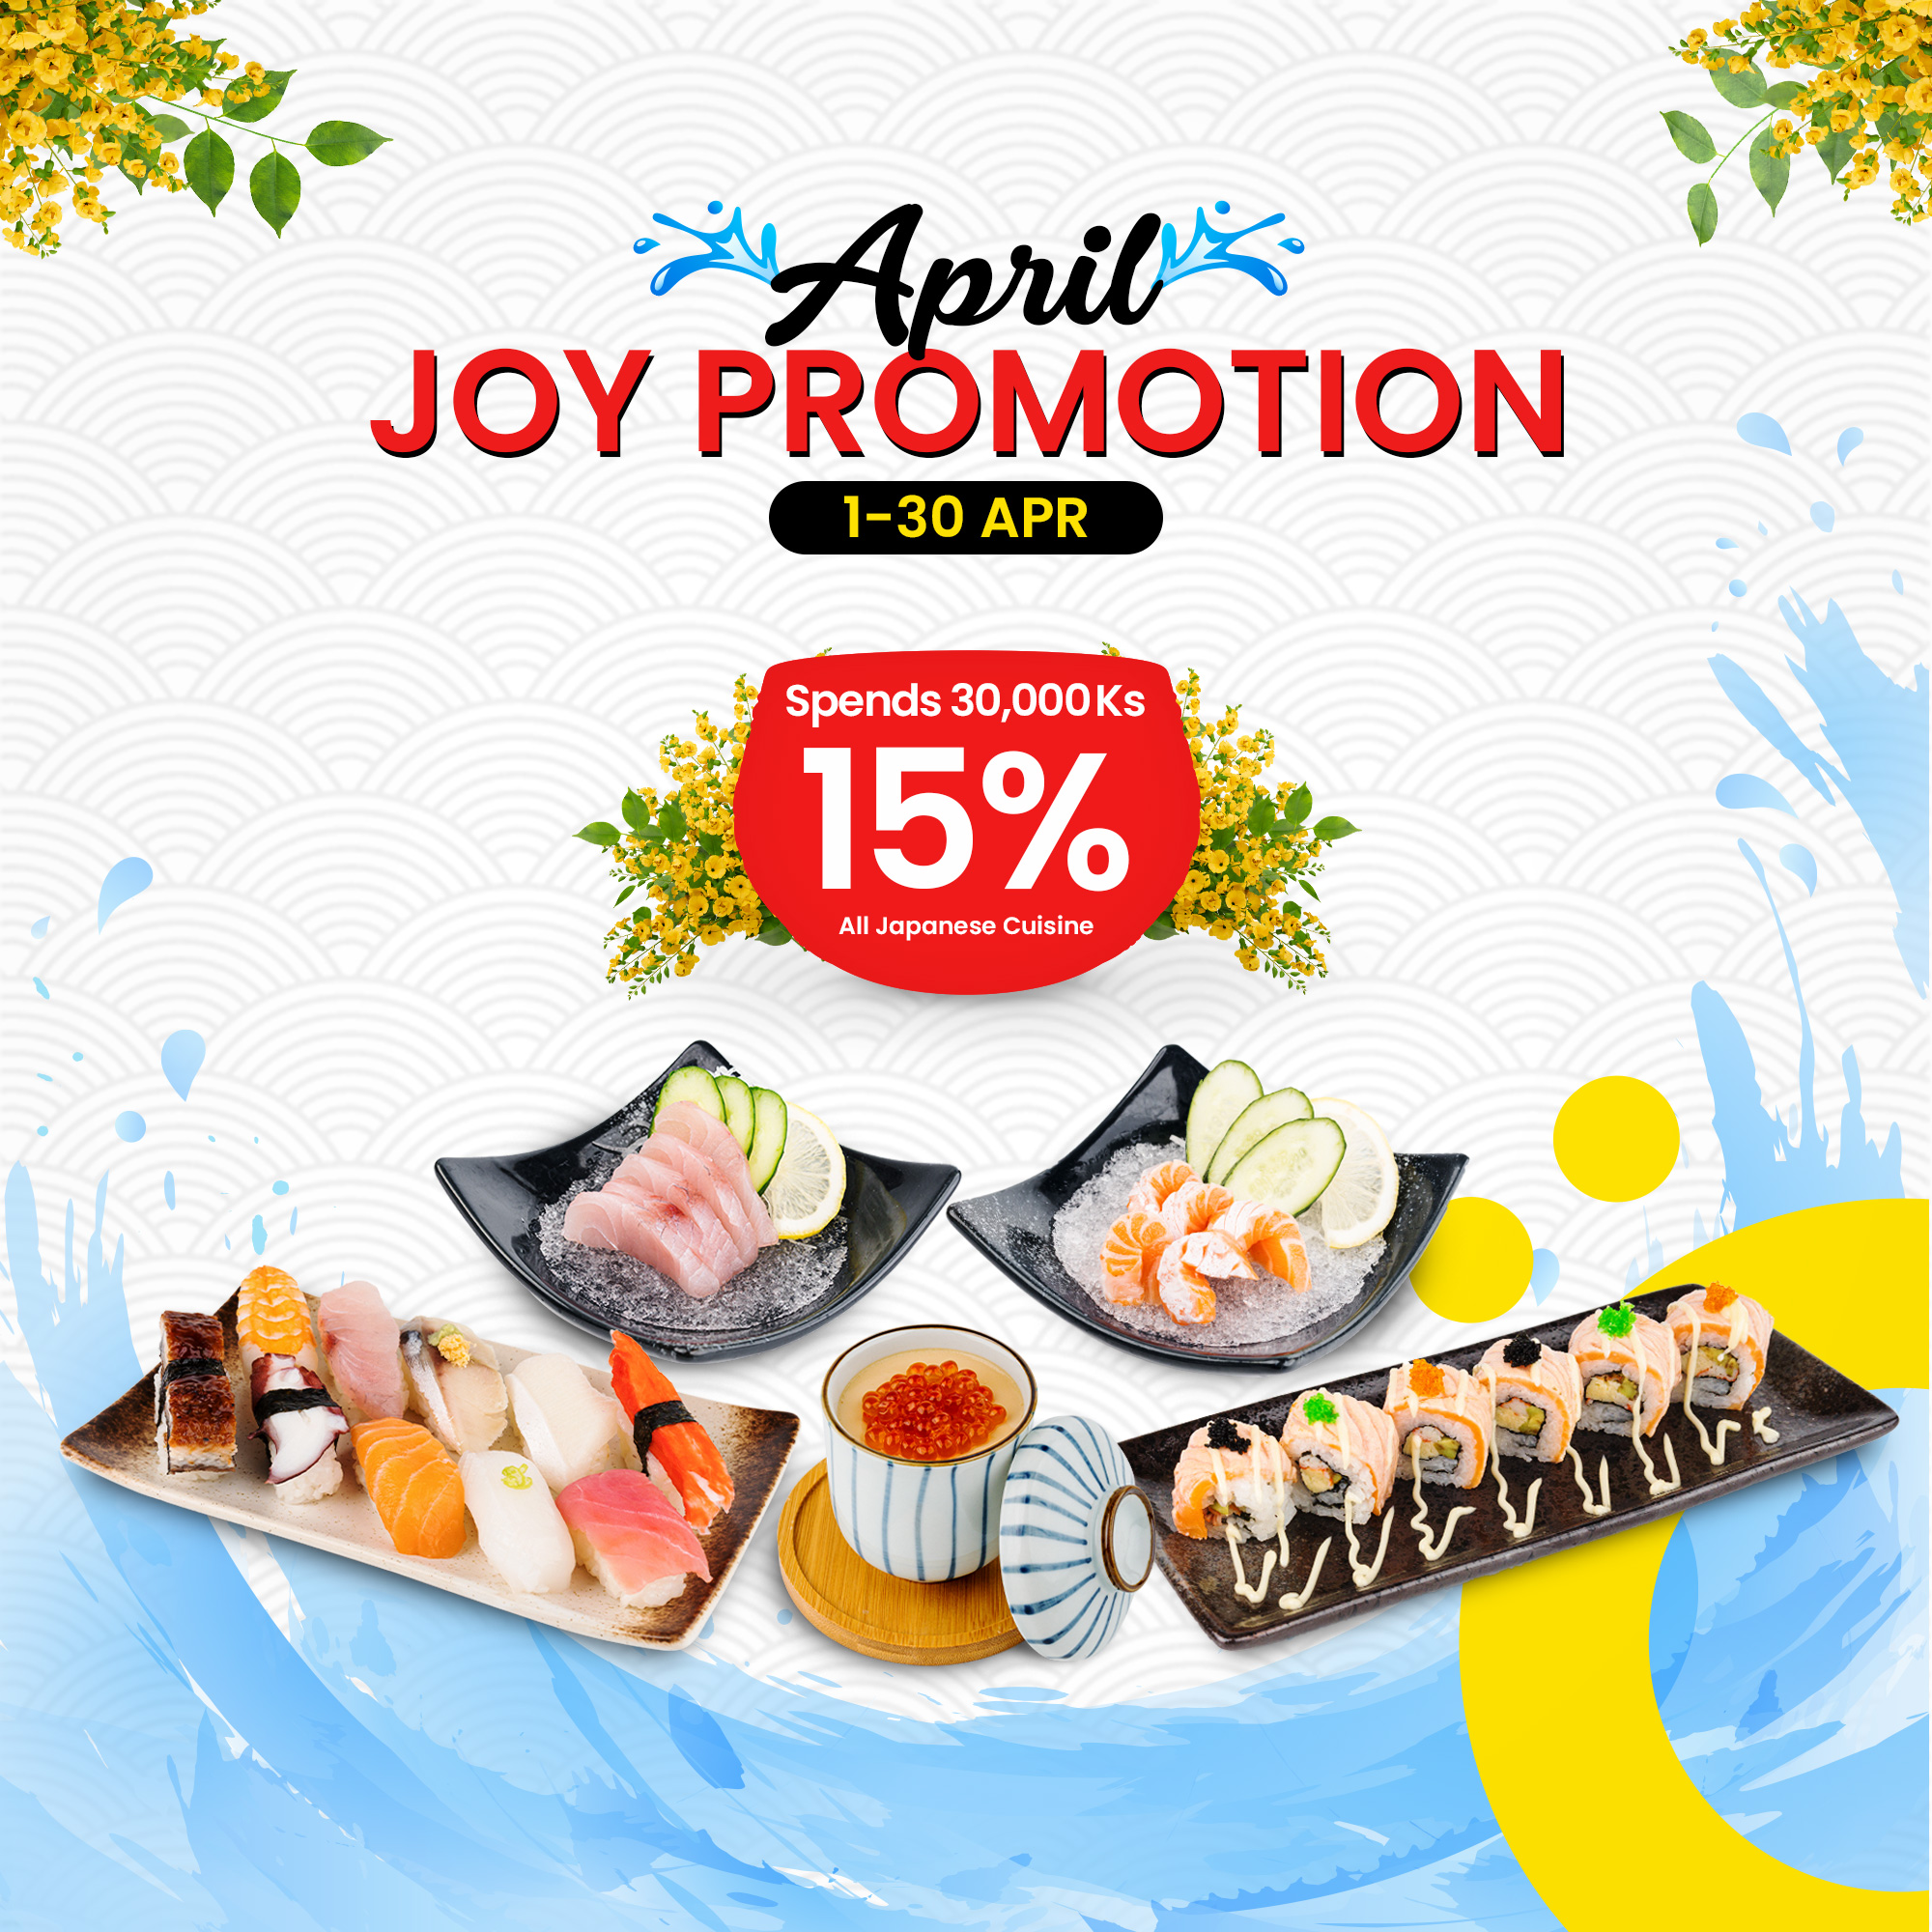 April Joy Promotion